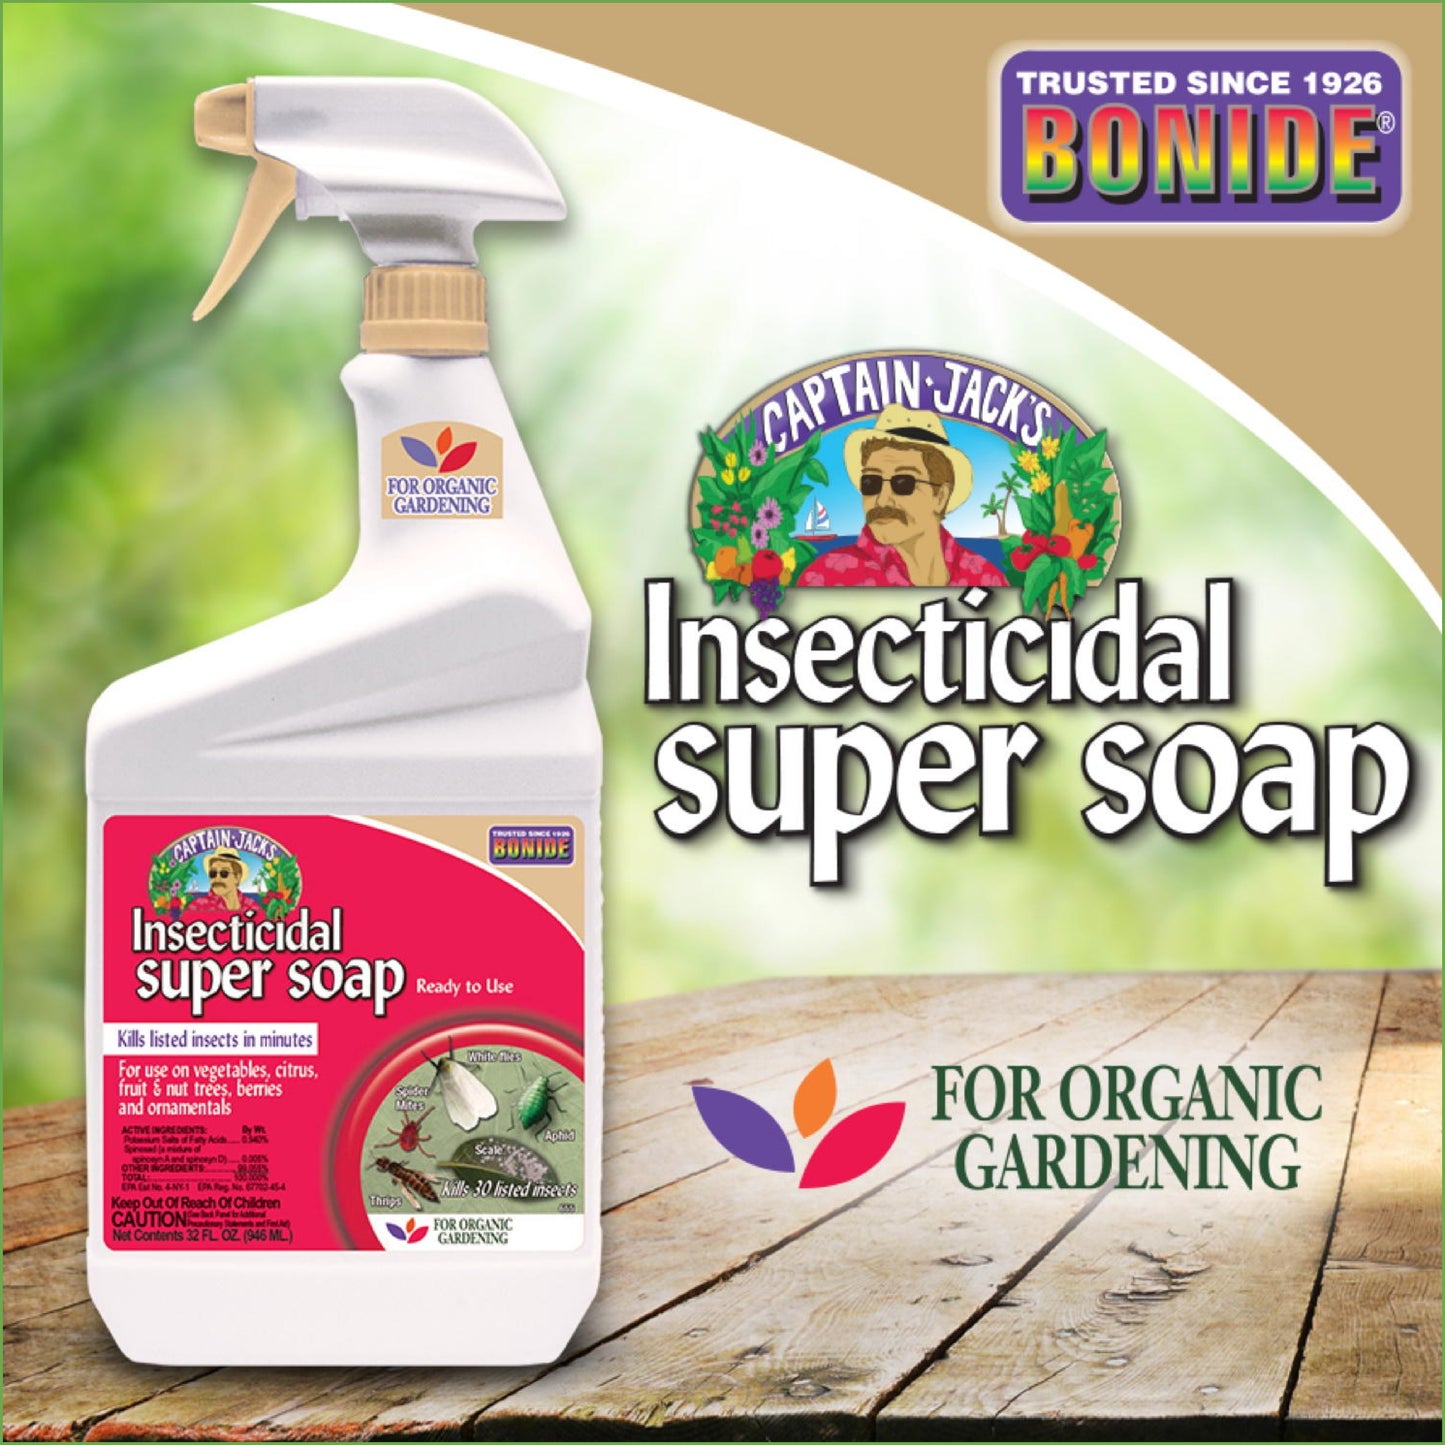 Bonide's Insecticidal Soap